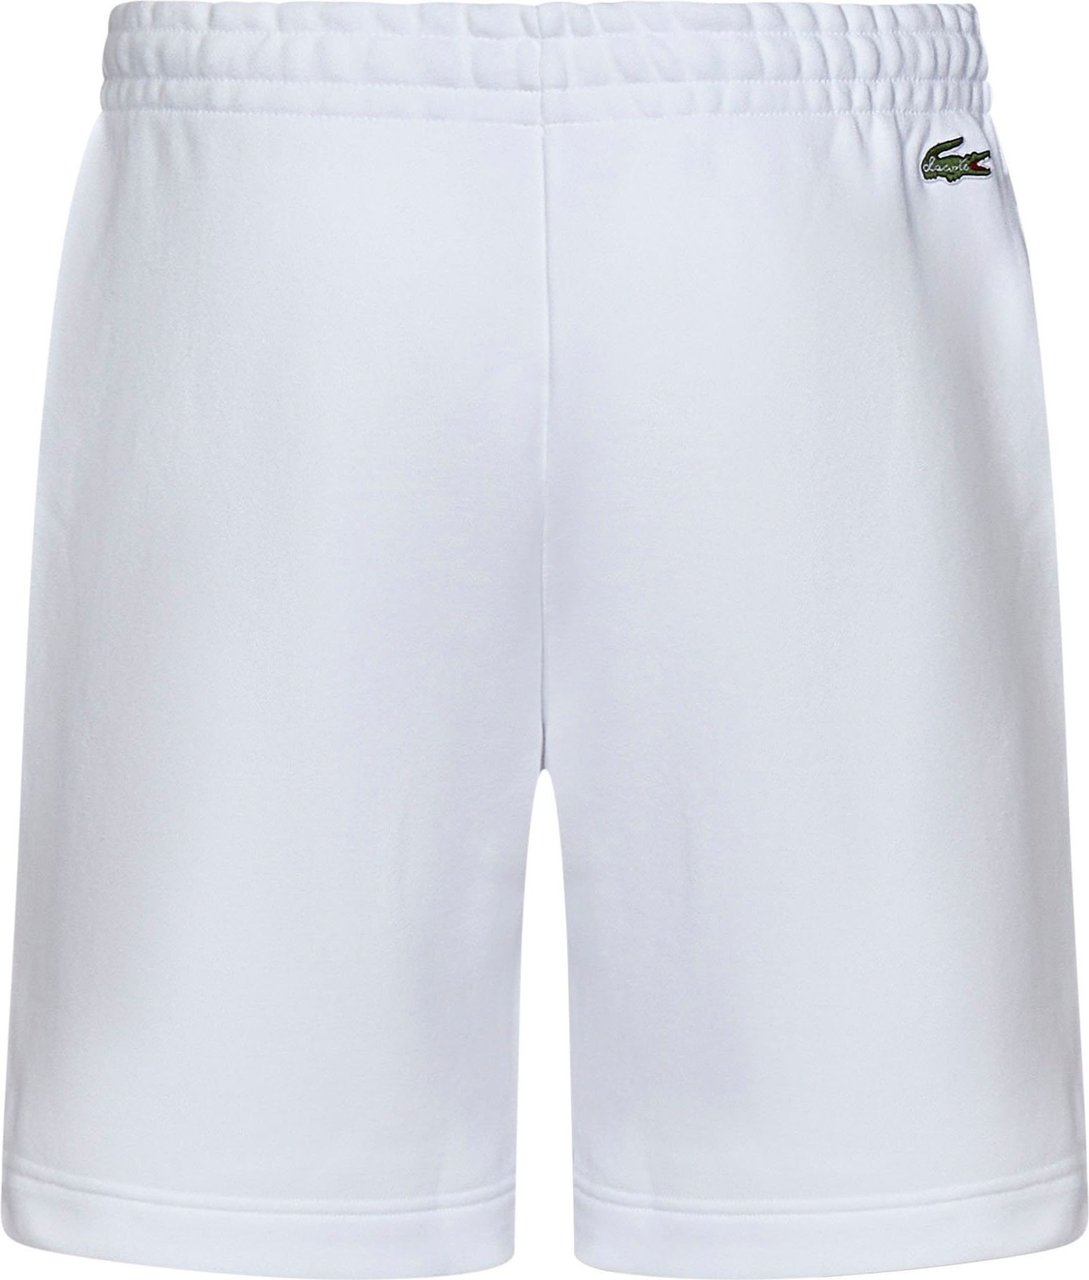 Lacoste Lacoste Shorts White Wit